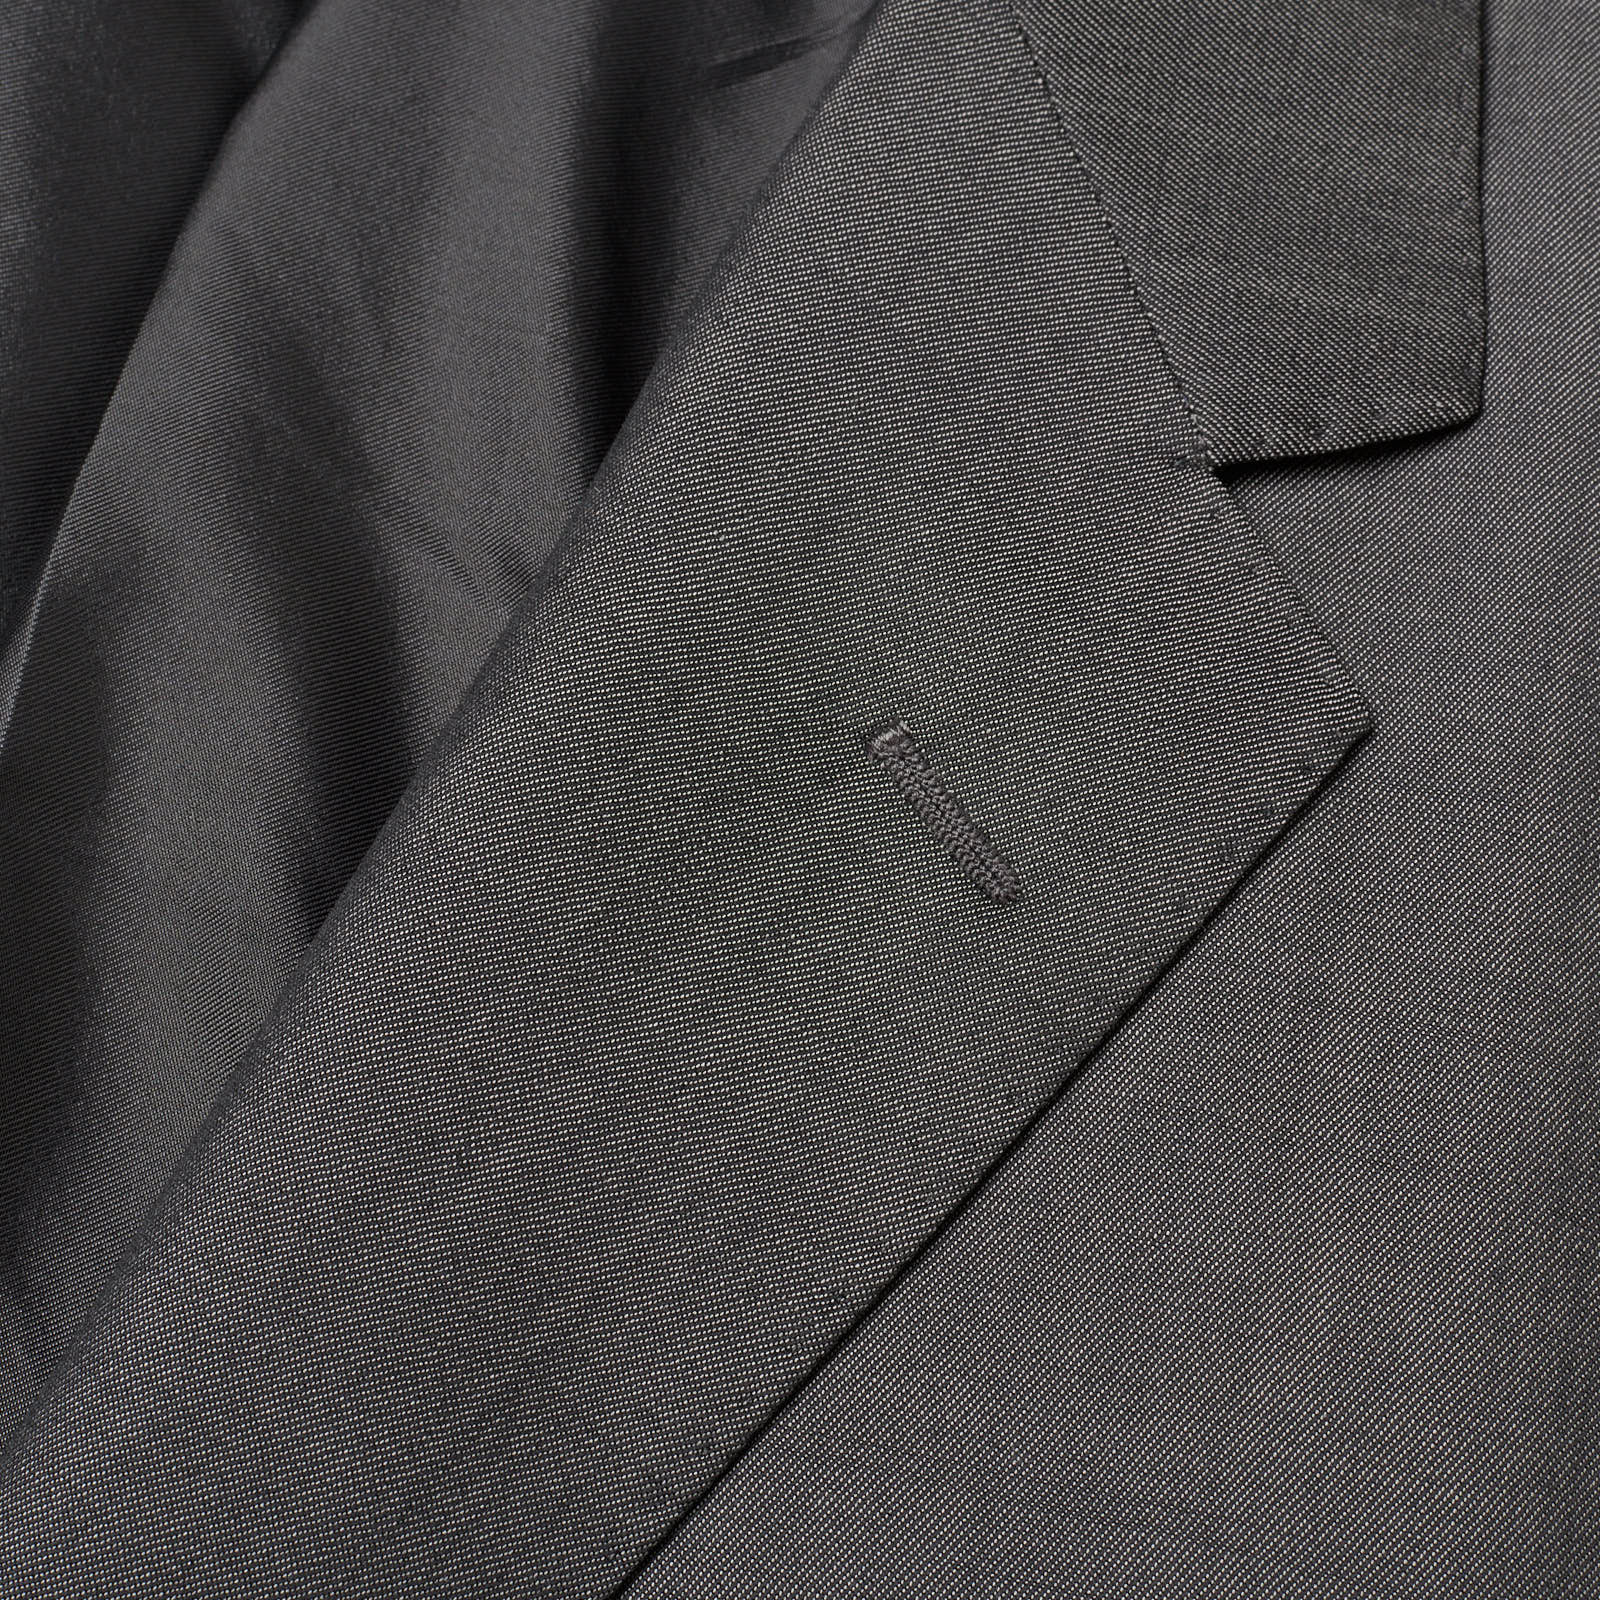 SARTORIO Napoli Gray Wool-Mohair Slim Fit Light Suit EU 54 NEW US 44